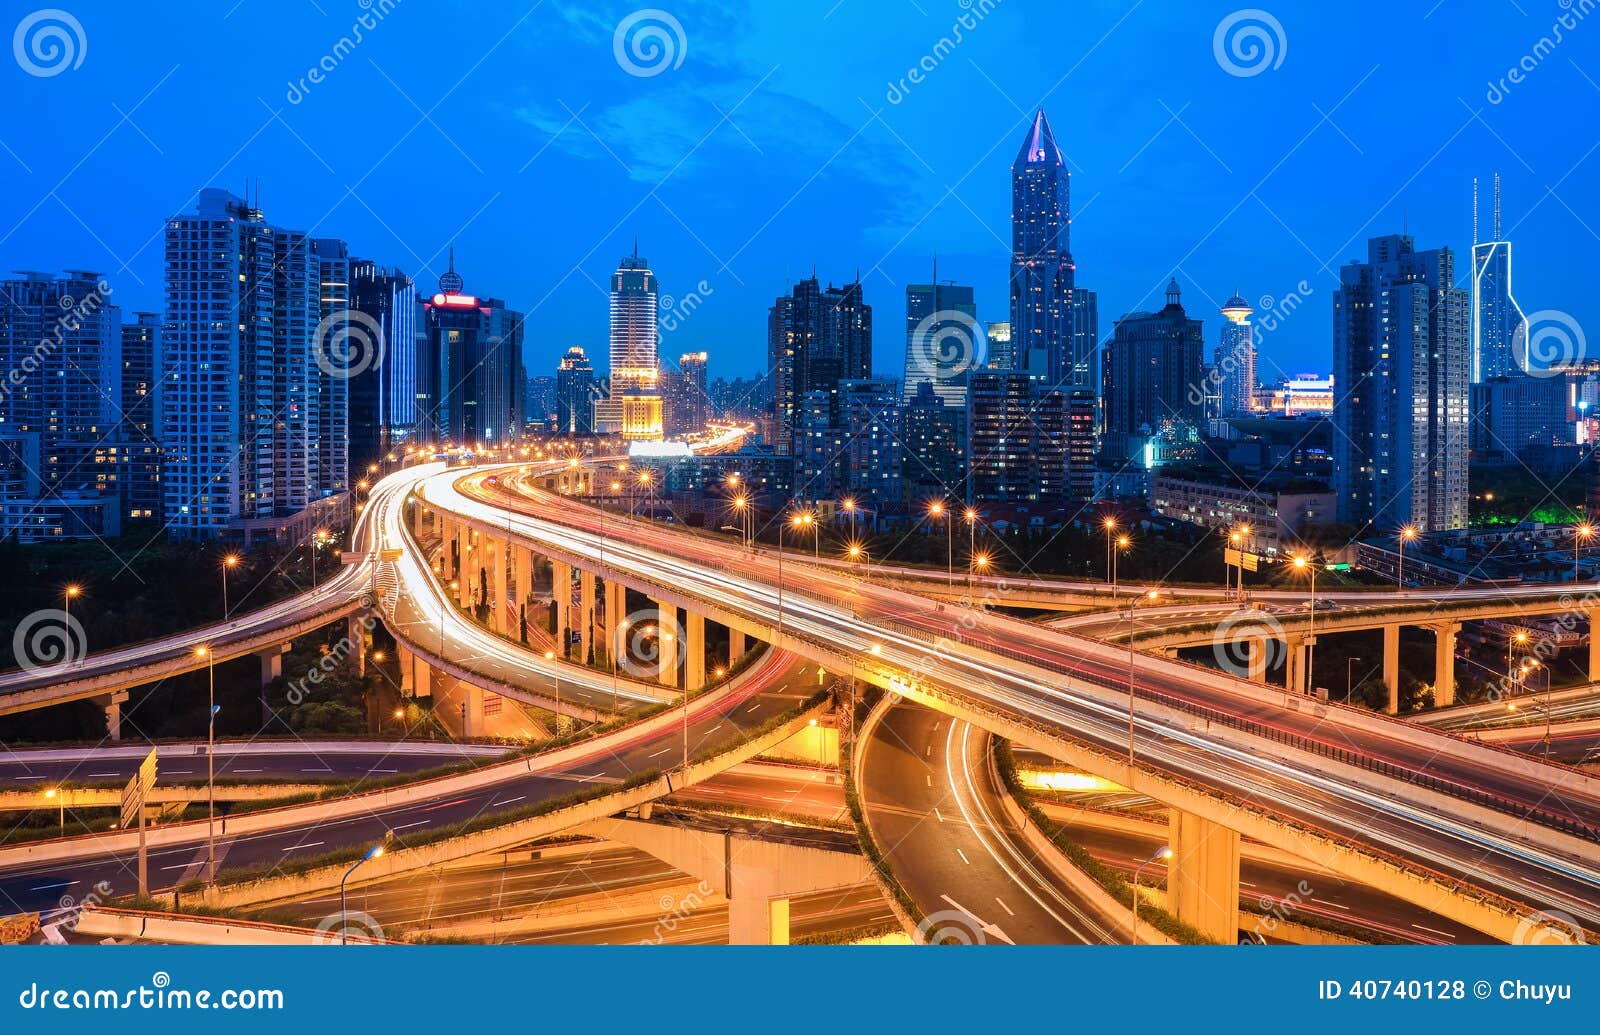 city interchange overpass in nightfall